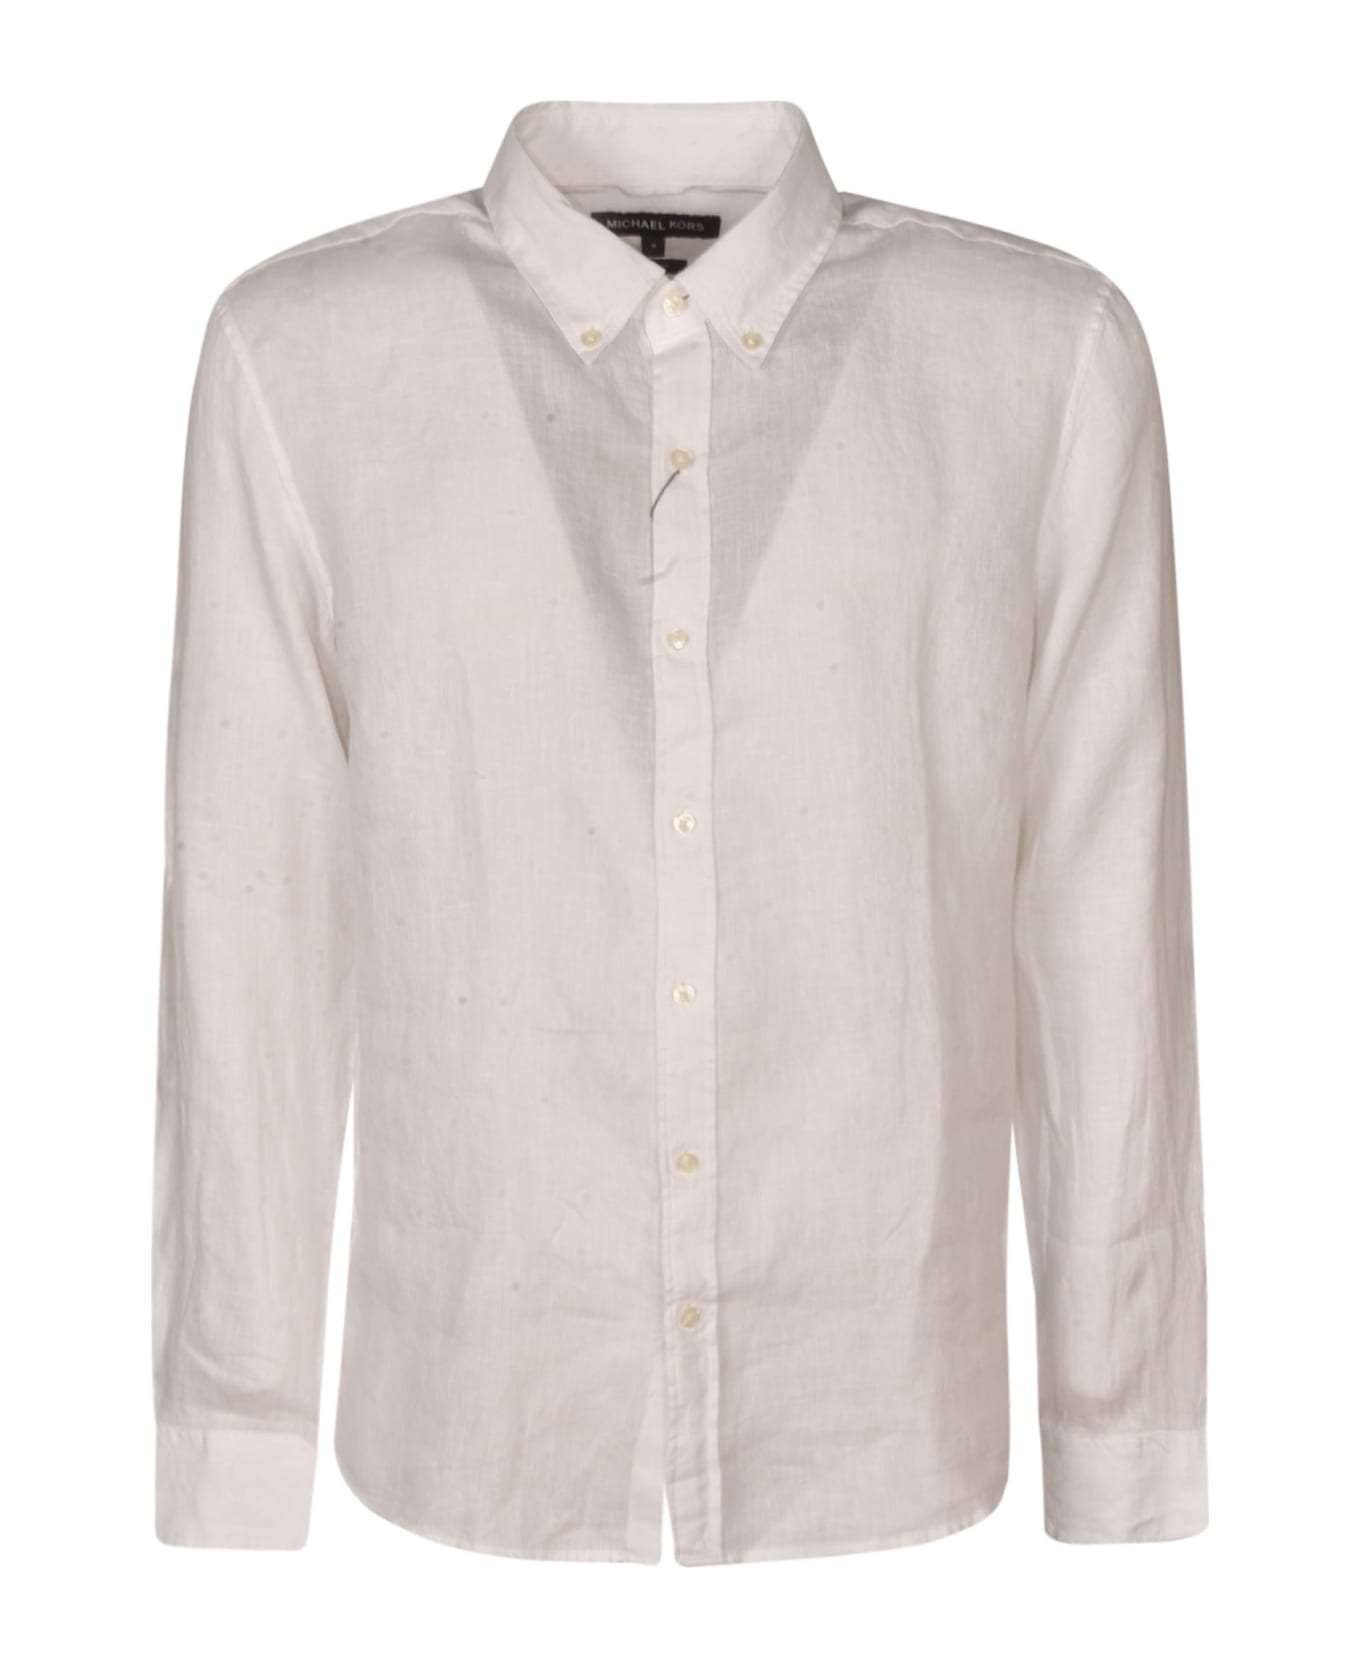 Michael Kors Classic Plain Shirt - White シャツ